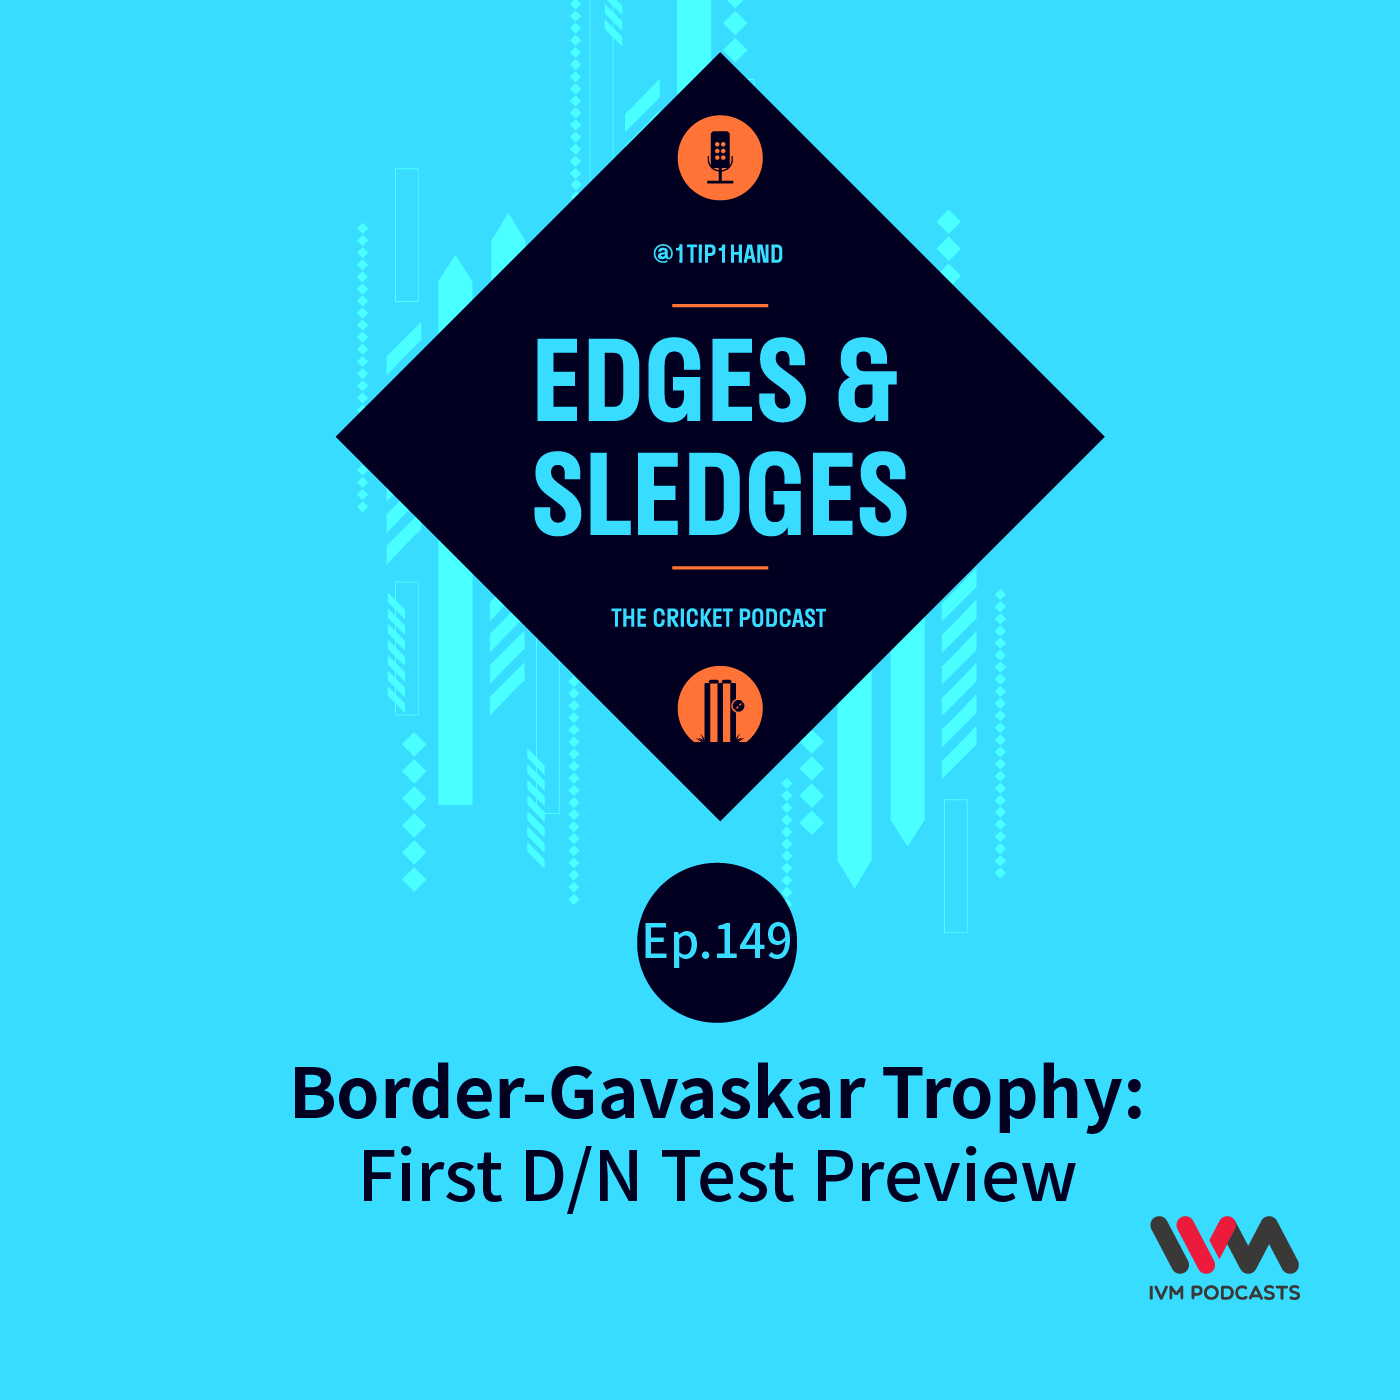 Border-Gavaskar Trophy: First D/N Test Preview